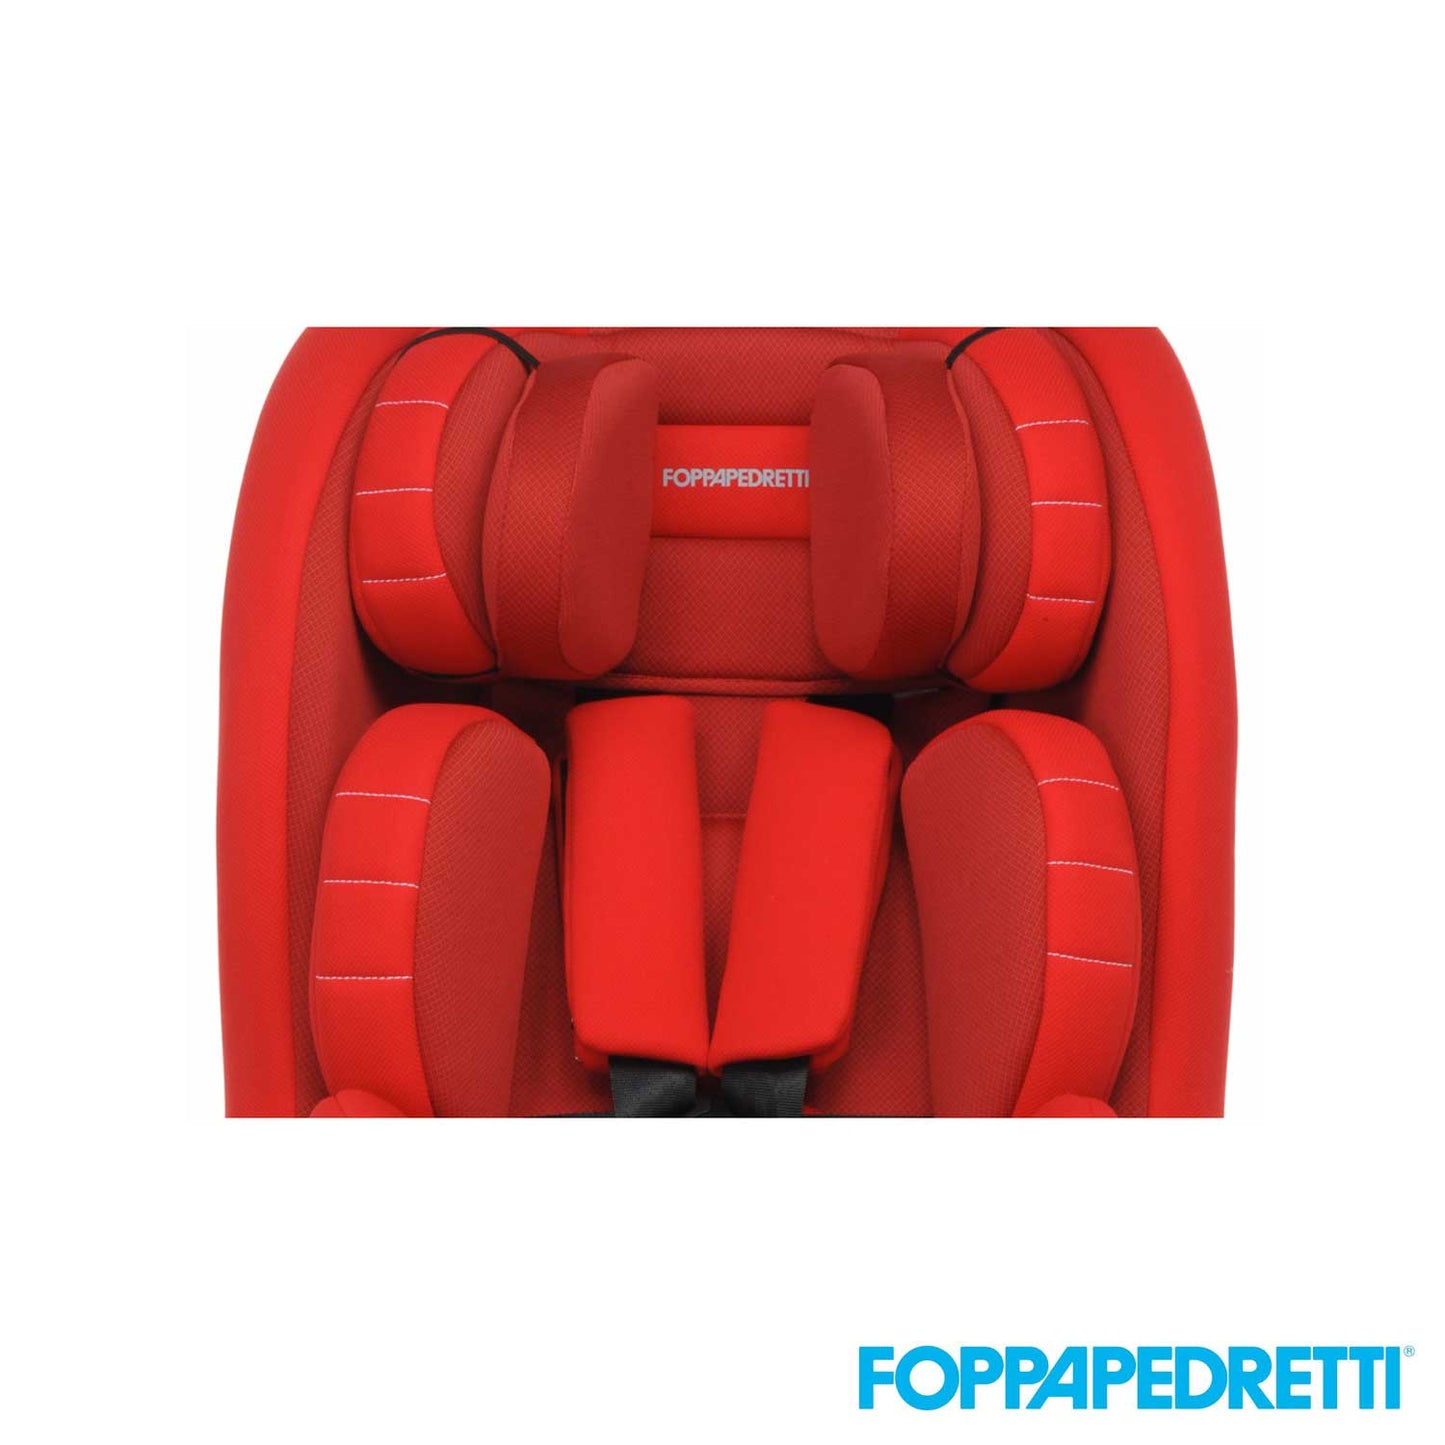 Foppapedretti - Logik i-Size car seat up to 18Kg